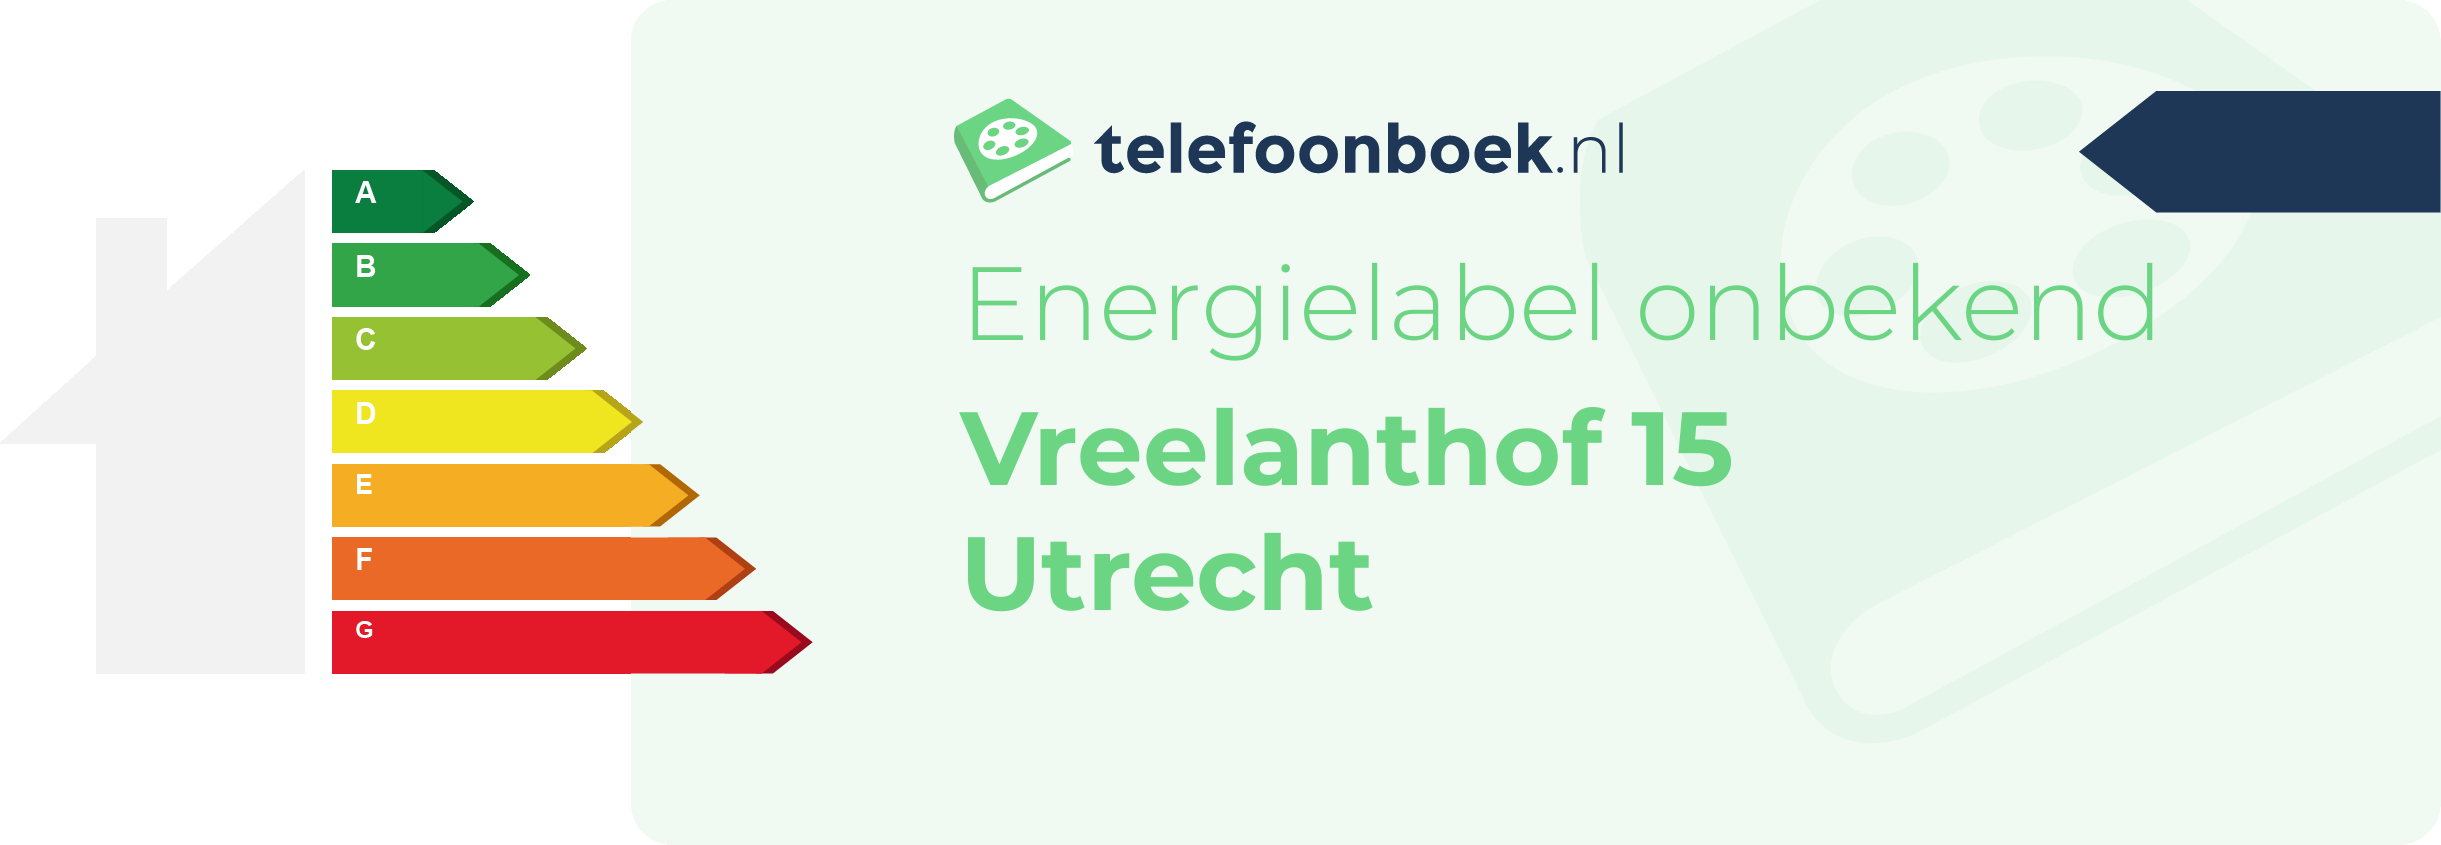 Energielabel Vreelanthof 15 Utrecht